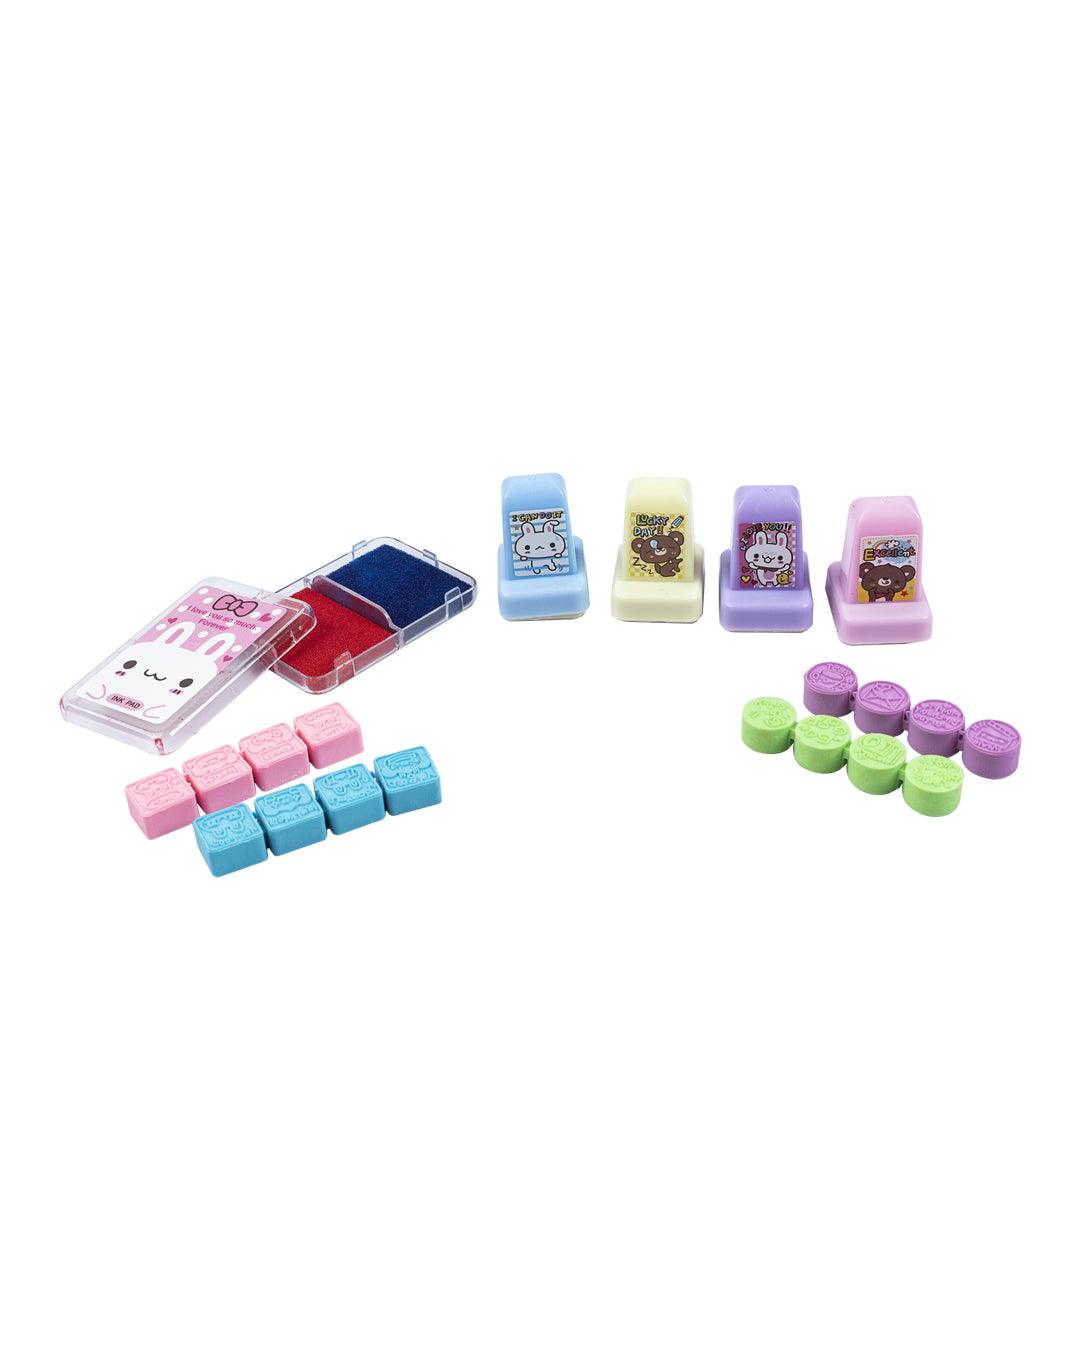 Stamp Craft Set, Stamps & Ink Pad, Multicolour, Plastic - MARKET 99